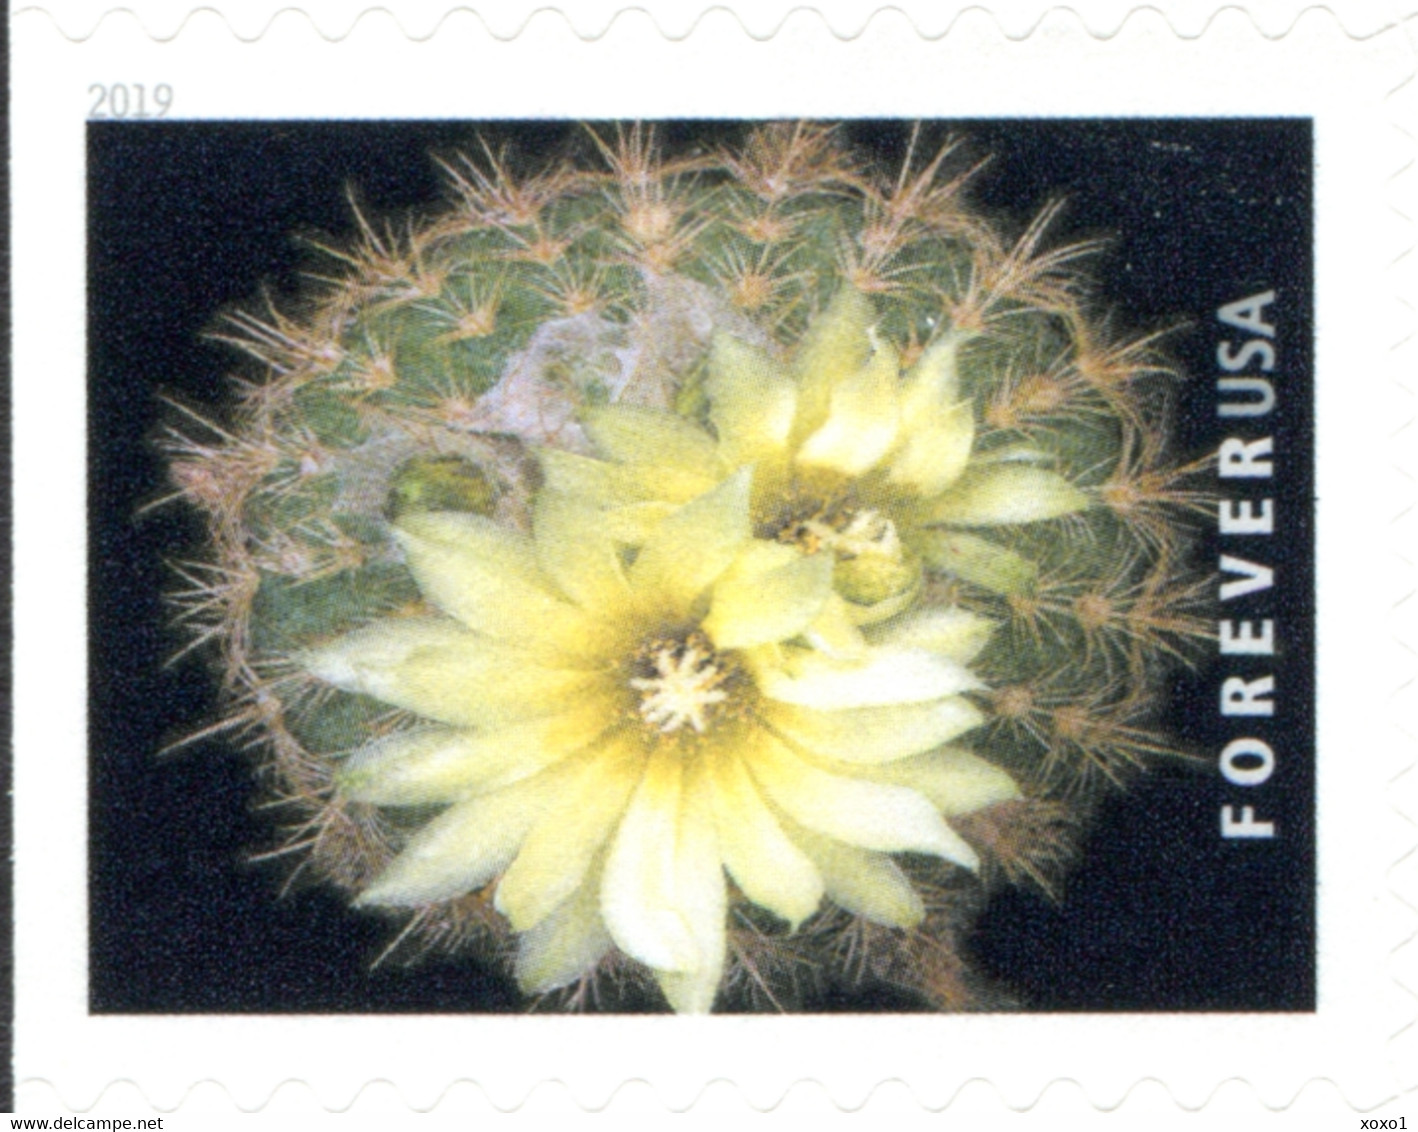 USA 2019 MiNr. 5566 - 5575  Cactus Flowers Plants  20v MNH** 26,00 €